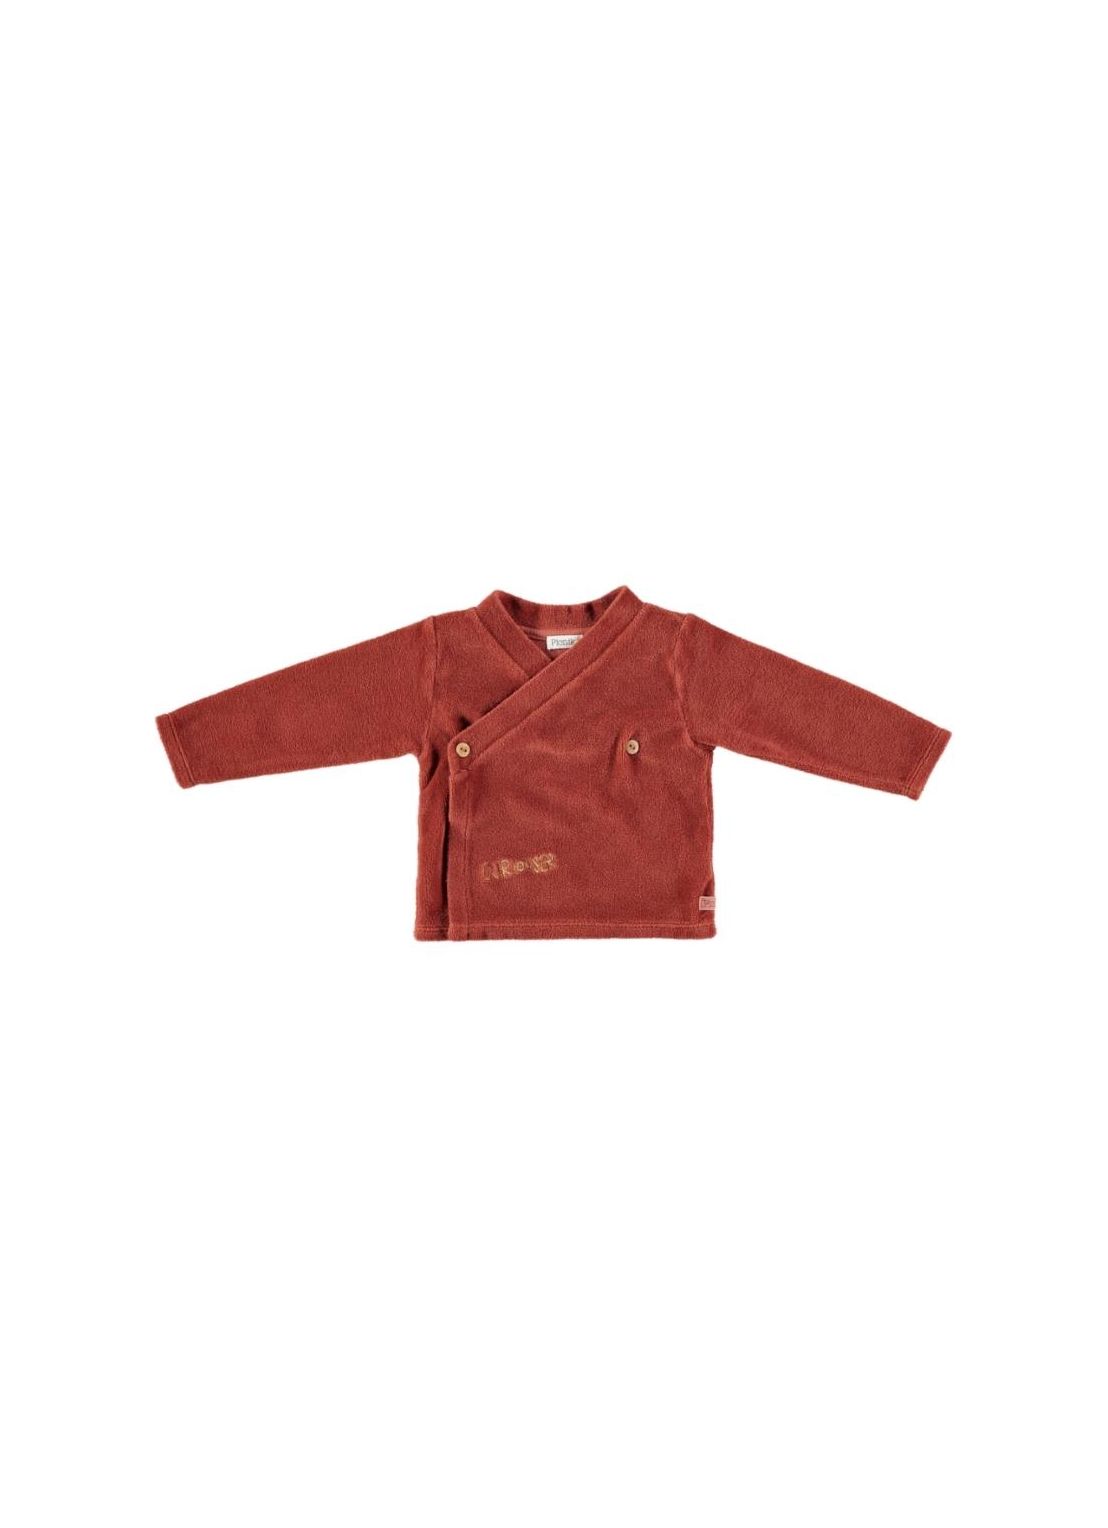 Baby T-shirt - Unisex- 100 % Organic Cotton- knitted